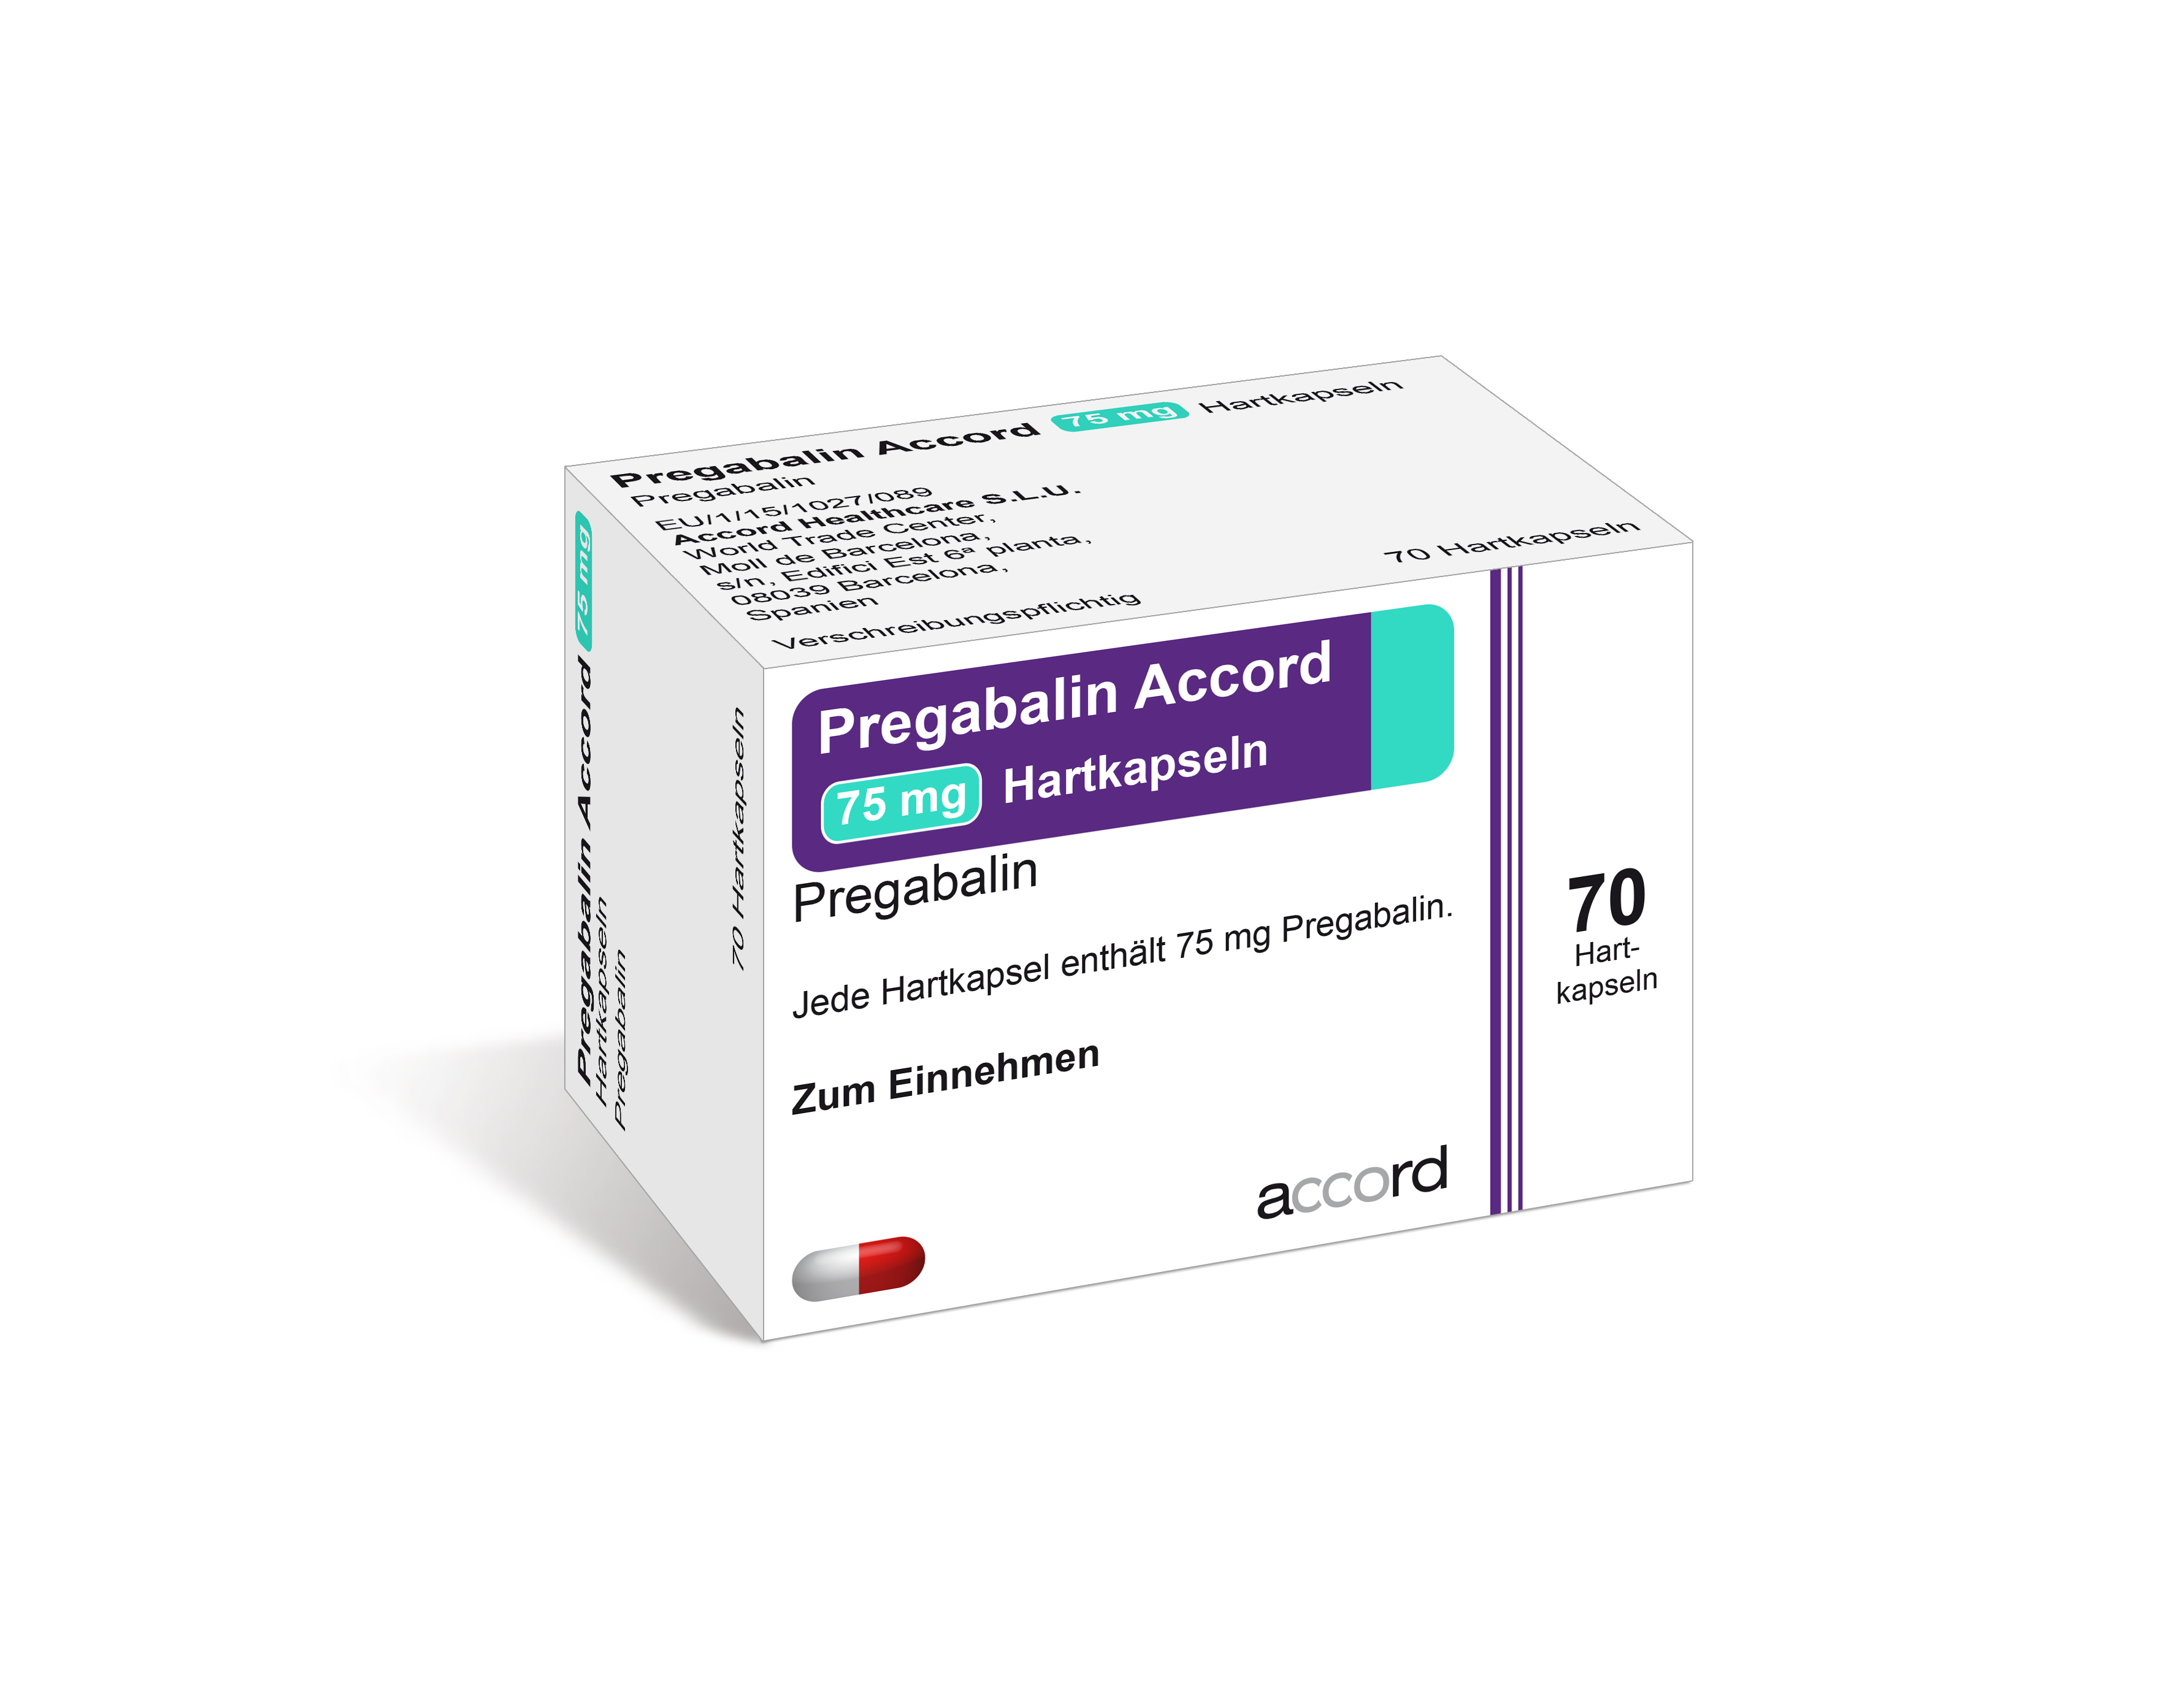 Accord Packshot Pregabalin 75 mg